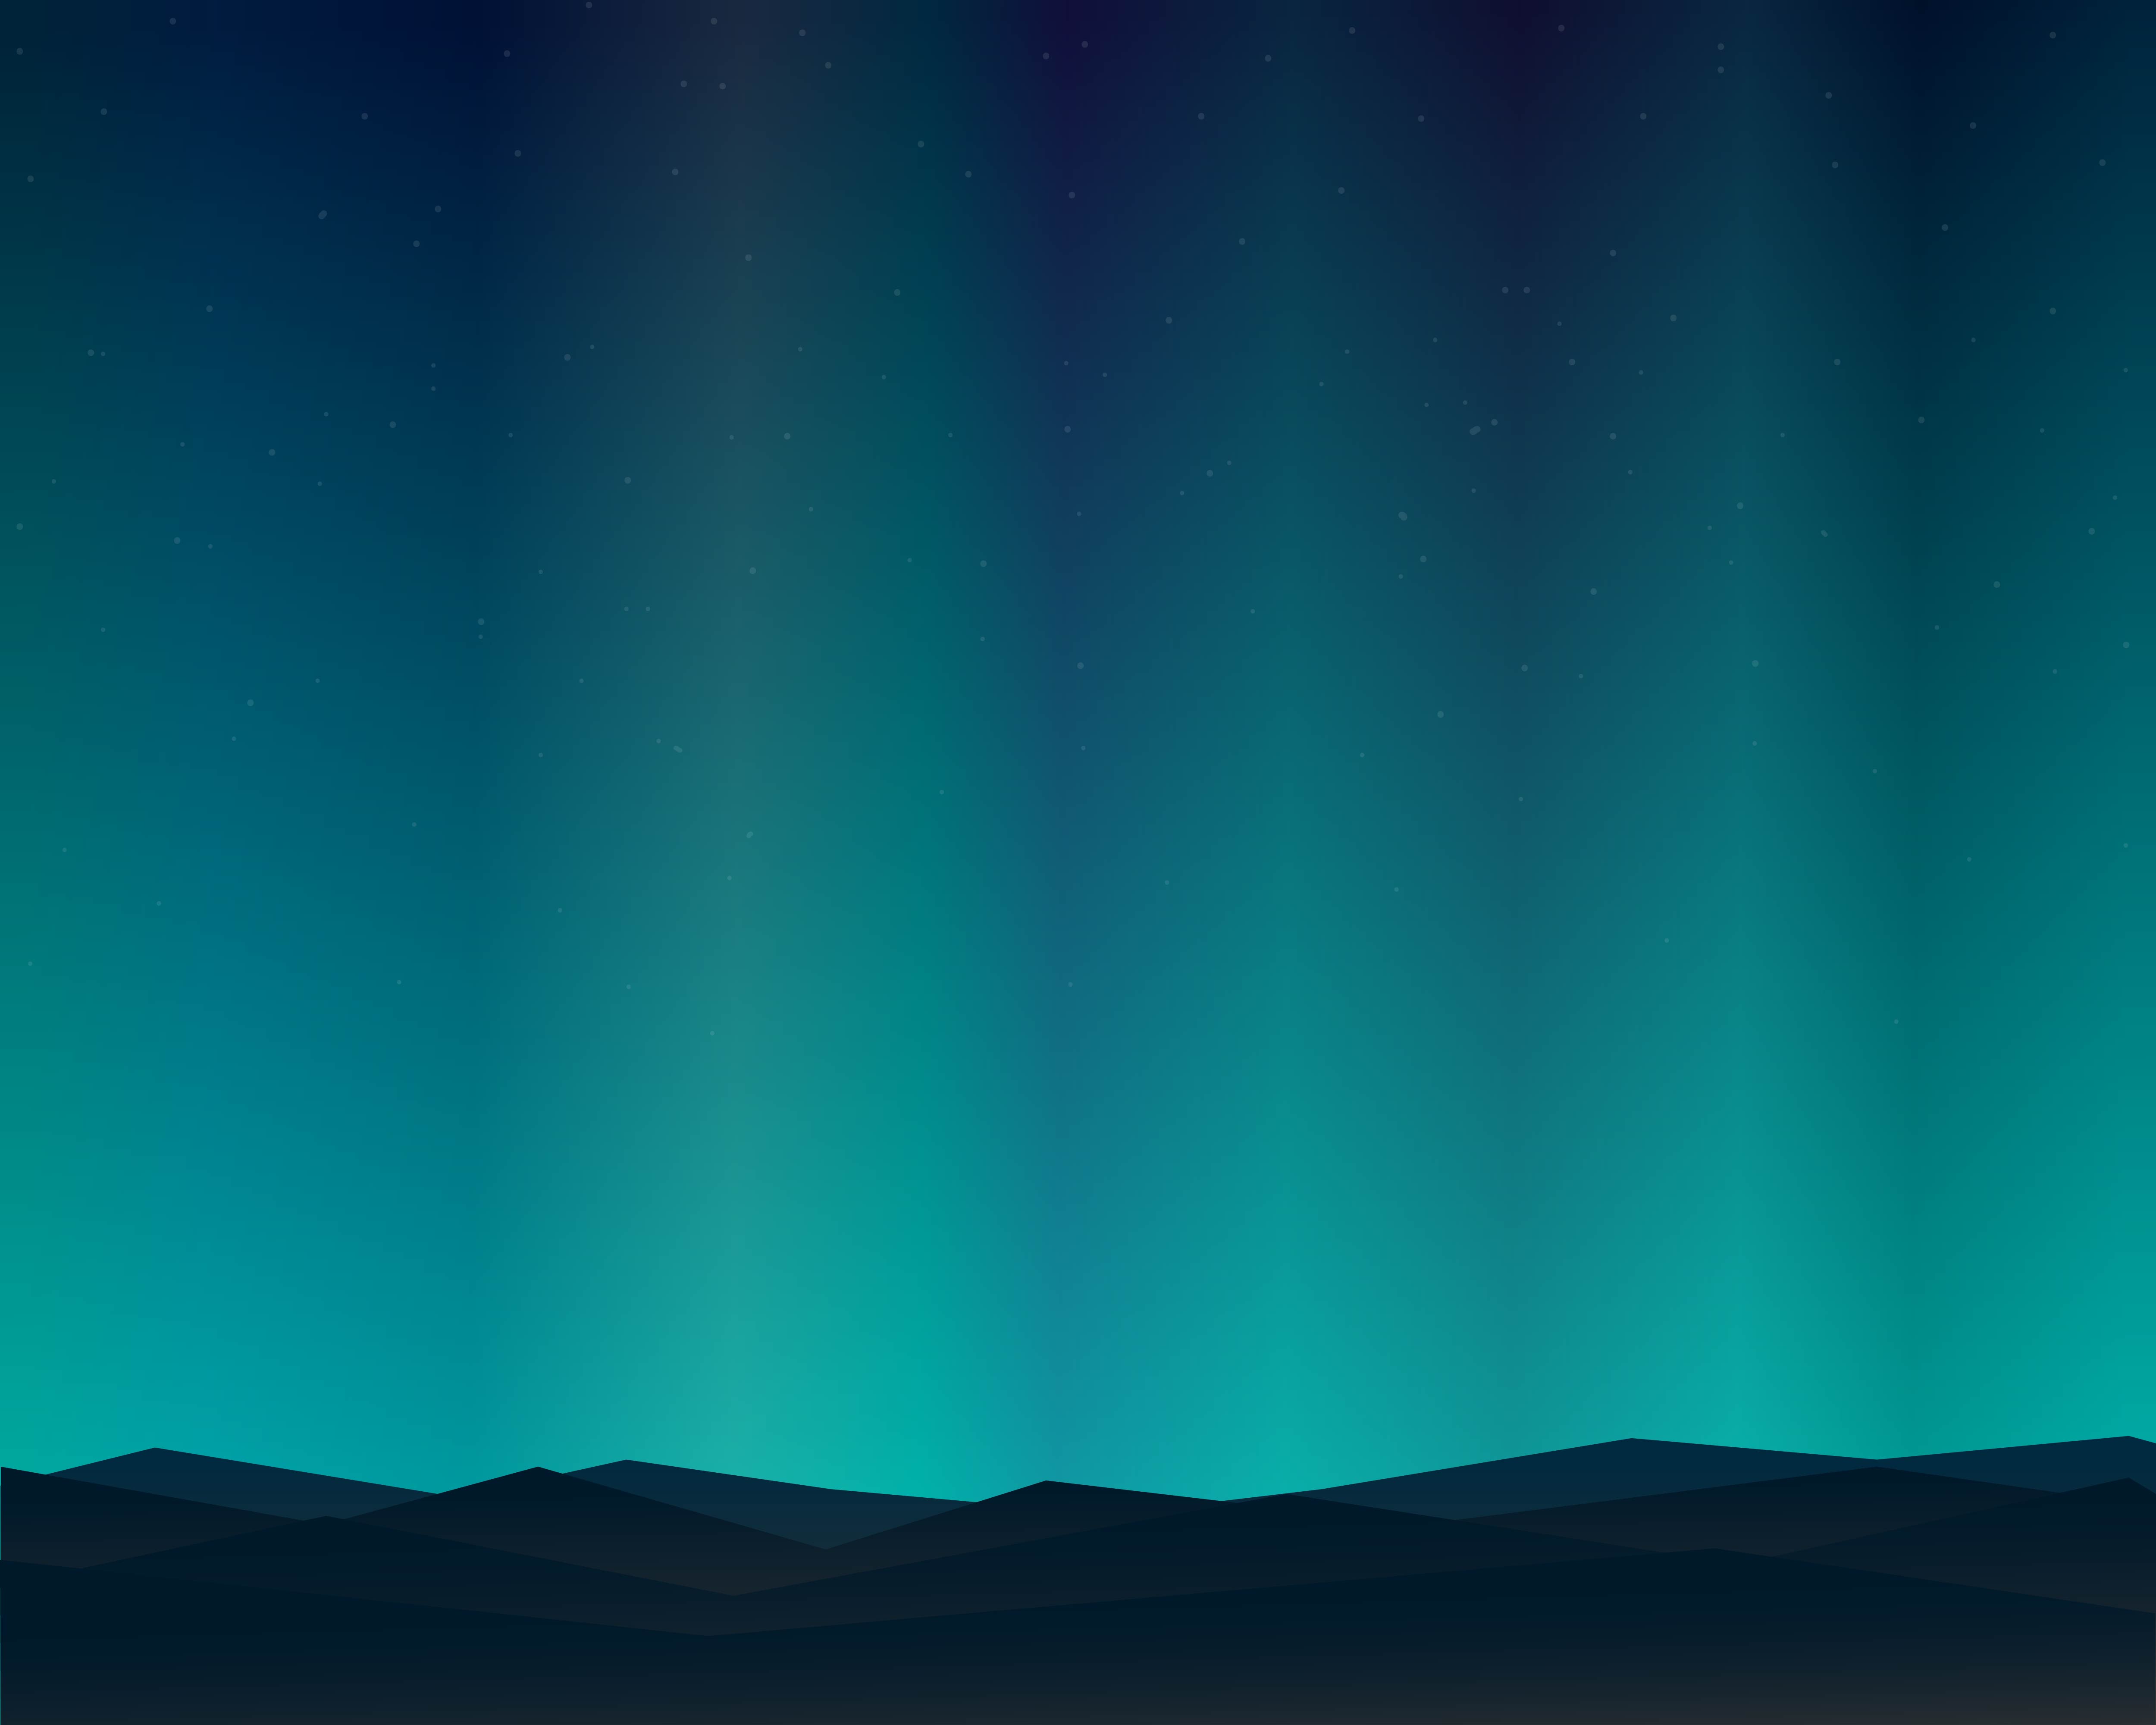 Mountain Northern Landscape Night With Aurora Stars Sky Background